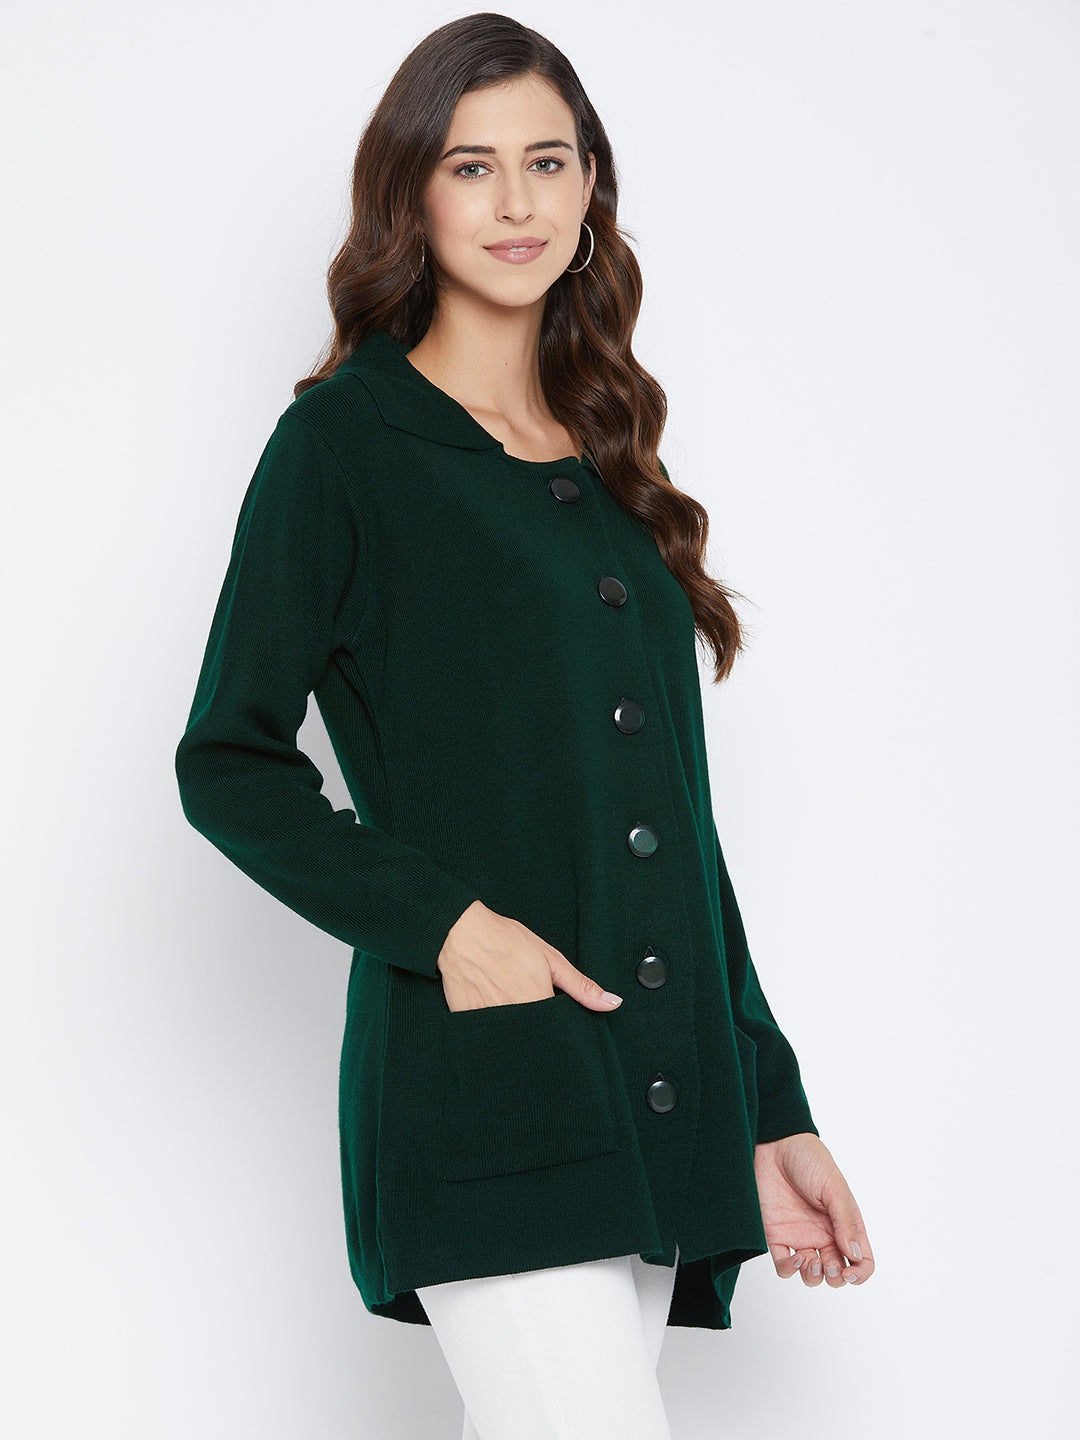 Livfree Women's Collar Neck Full-Sleeves Solid Cardigan - Dark Green